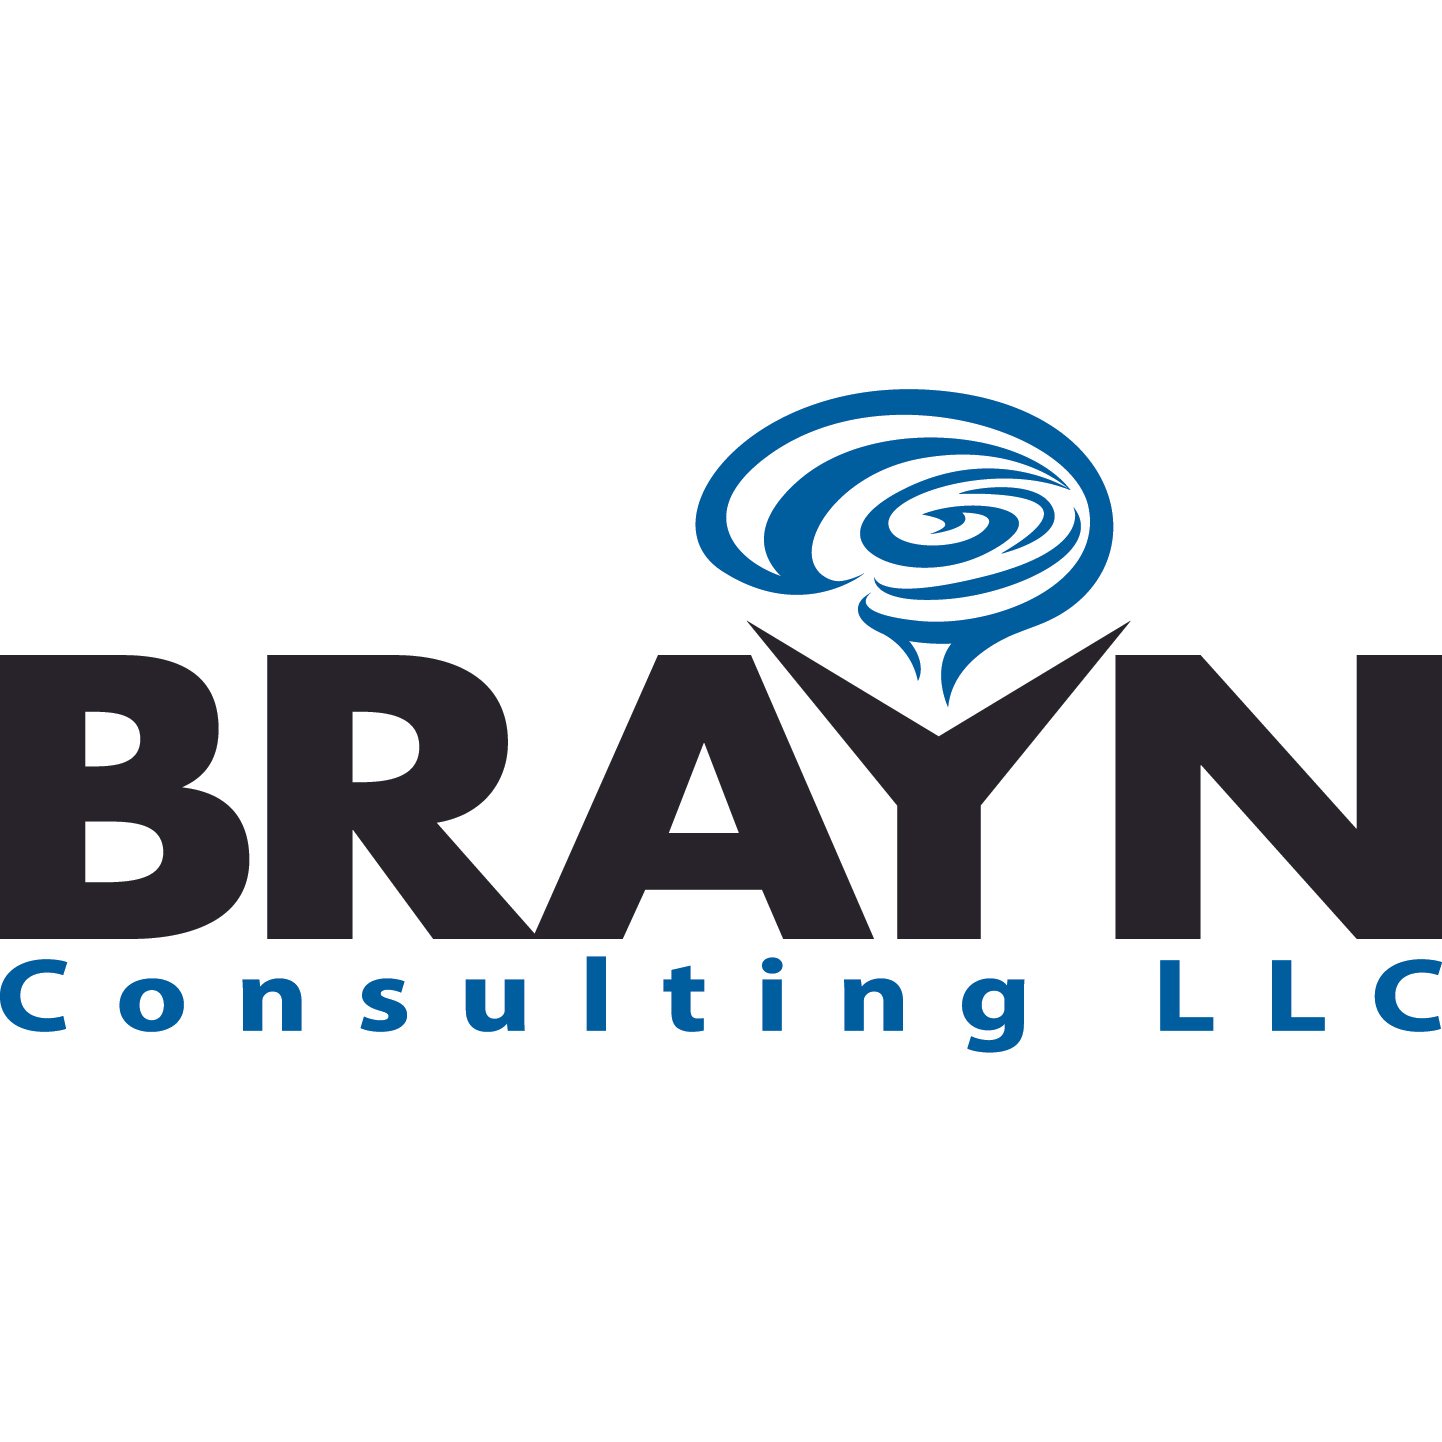 BRAYN Logo - No Gradient.jpg